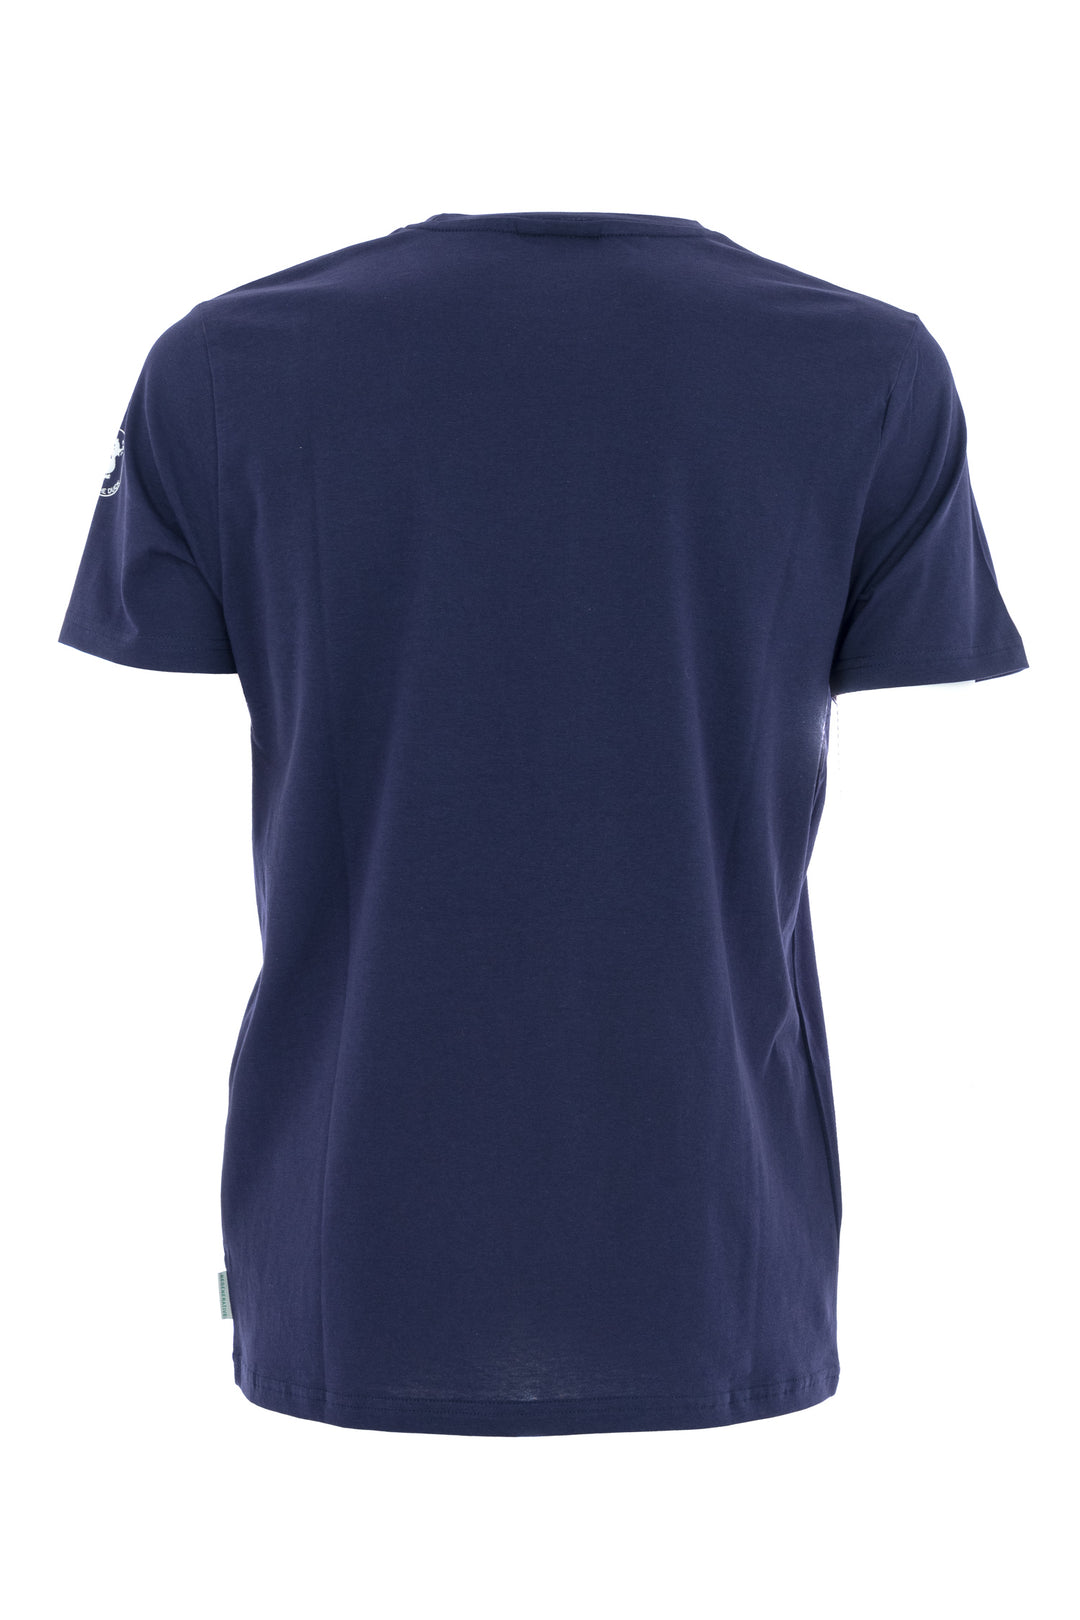 SAVE THE DUCK T-shirt girocollo DAMIEN con tasca sul petto blu navy - Mancinelli 1954